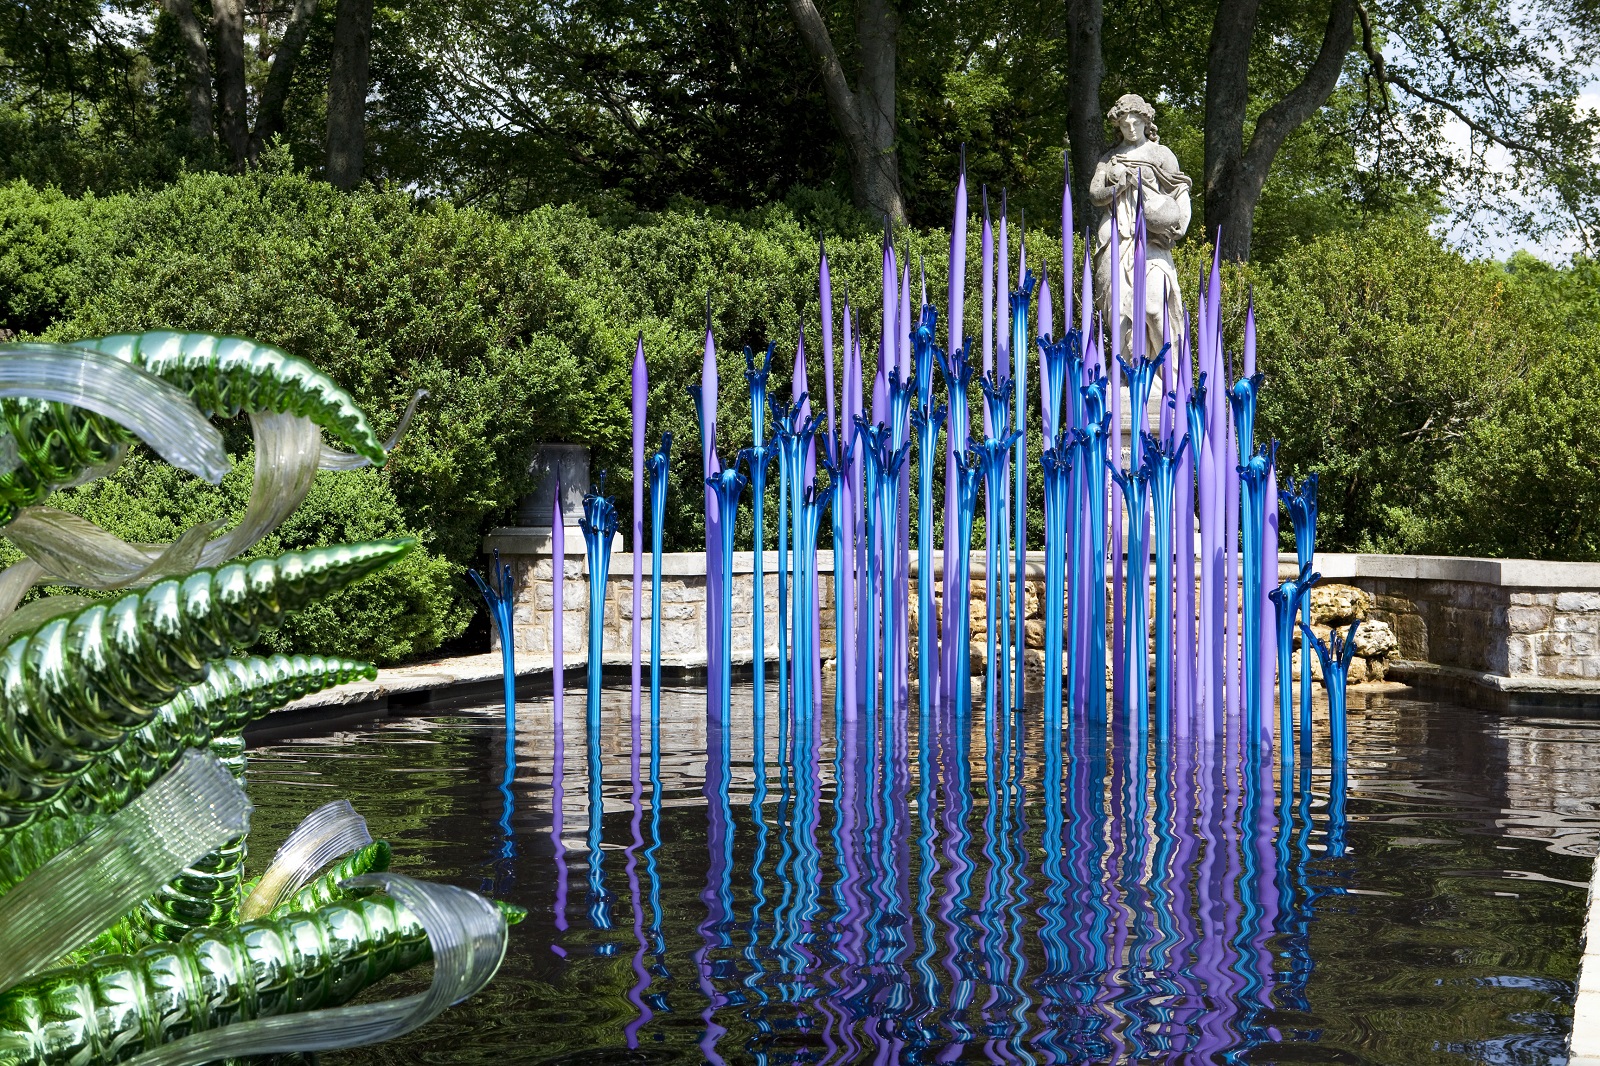  Blue Fiddleheads and Neodymium Reeds, 2010  Cheekwood Botanical Garden and Museum of Art, Nashville